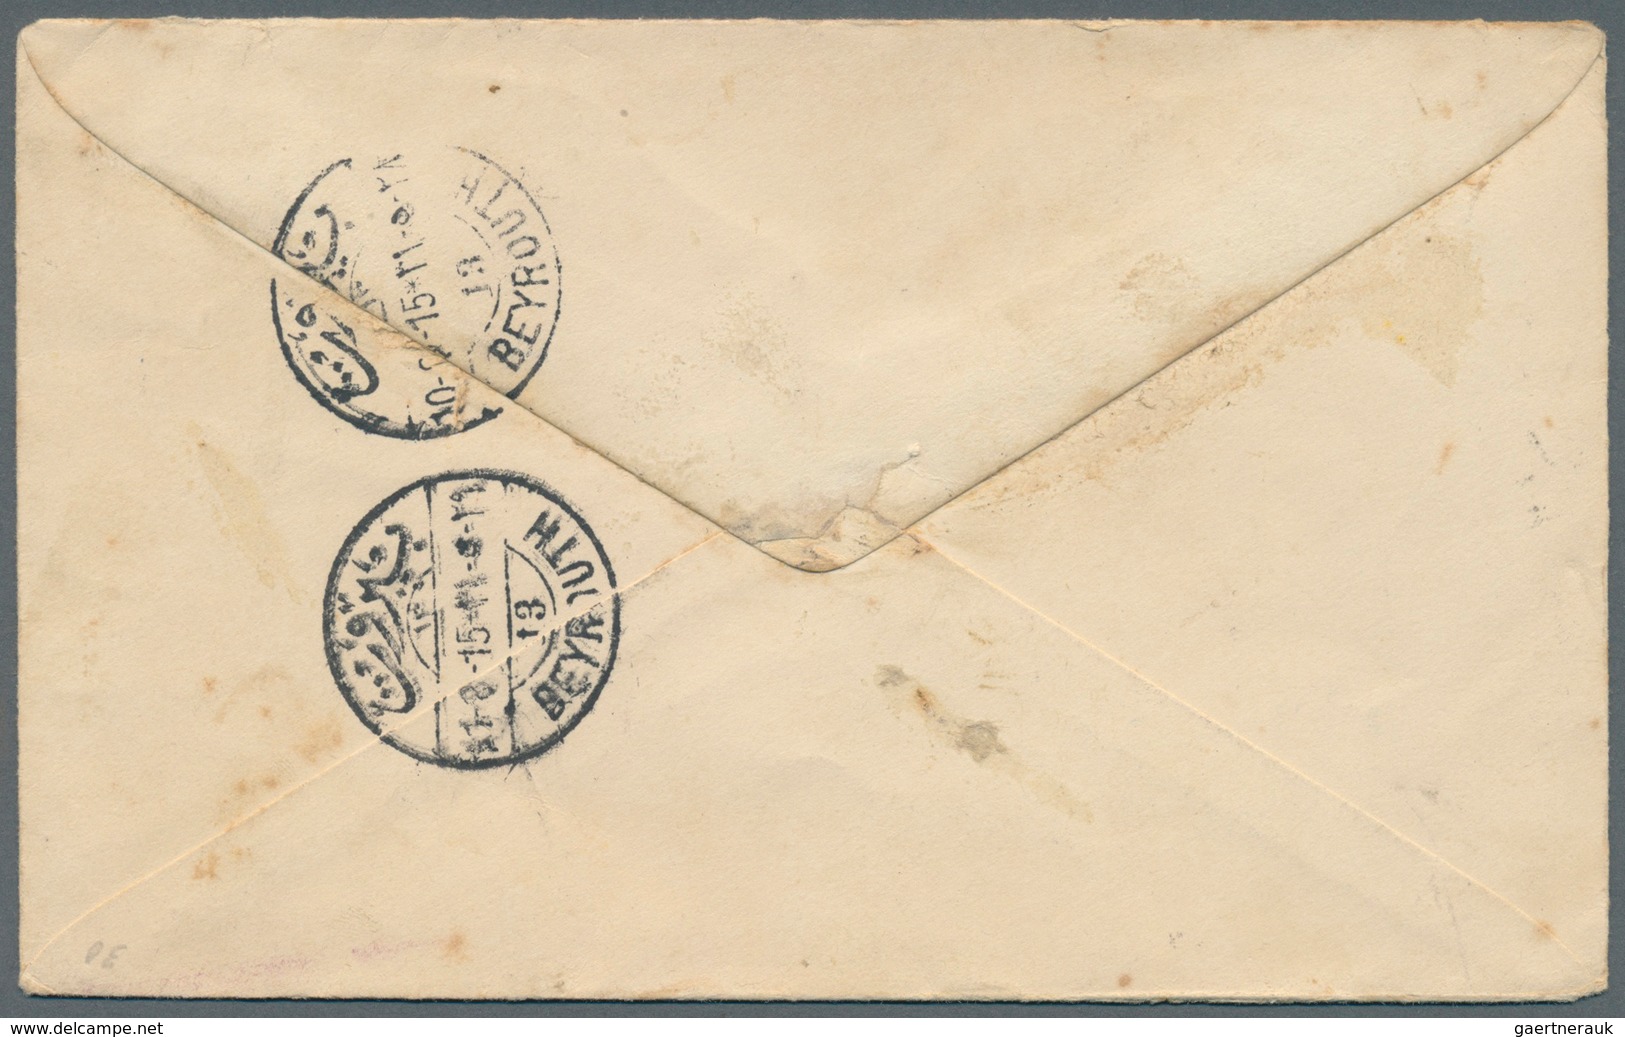 Libanon: 1915, DJUBEIL (LIBAN) (Isfila No.1, RR) On 20 Para Postal Stationery Envelope Used Uprated - Lebanon